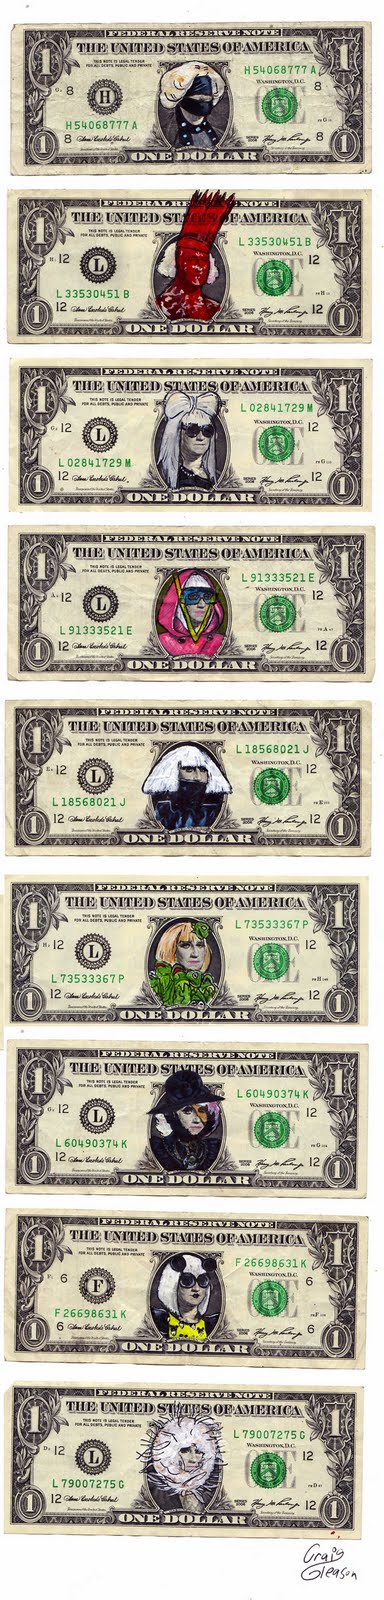 Lady Gaga Kermit Outfit. These Lady Gaga dollars by